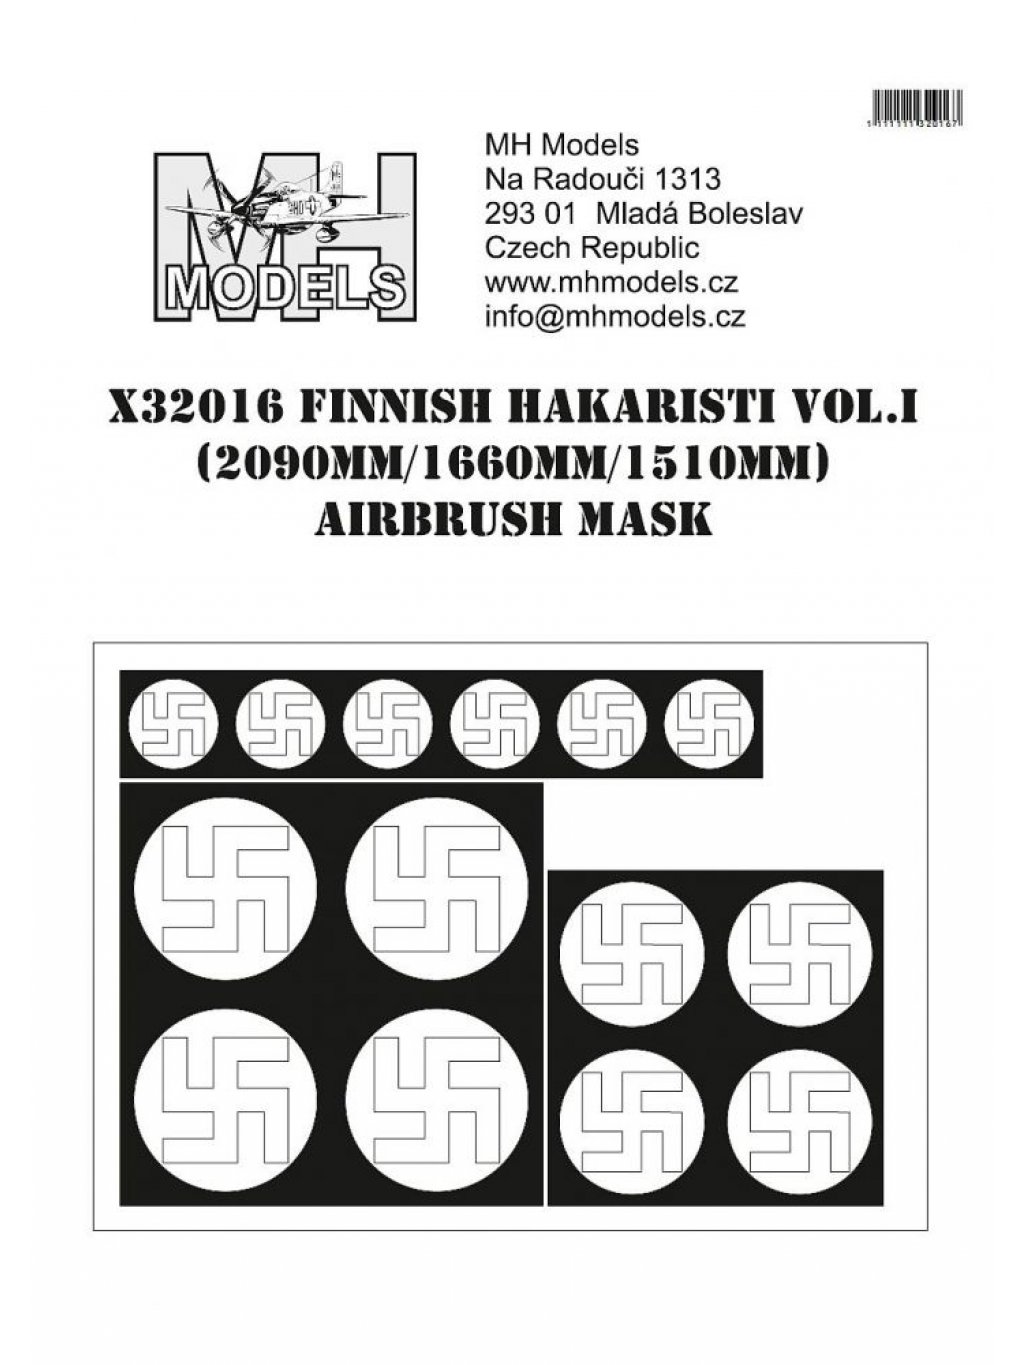 Finnish hakaristi vol.I 2090mm/1660mm/1510mm airbrush mask